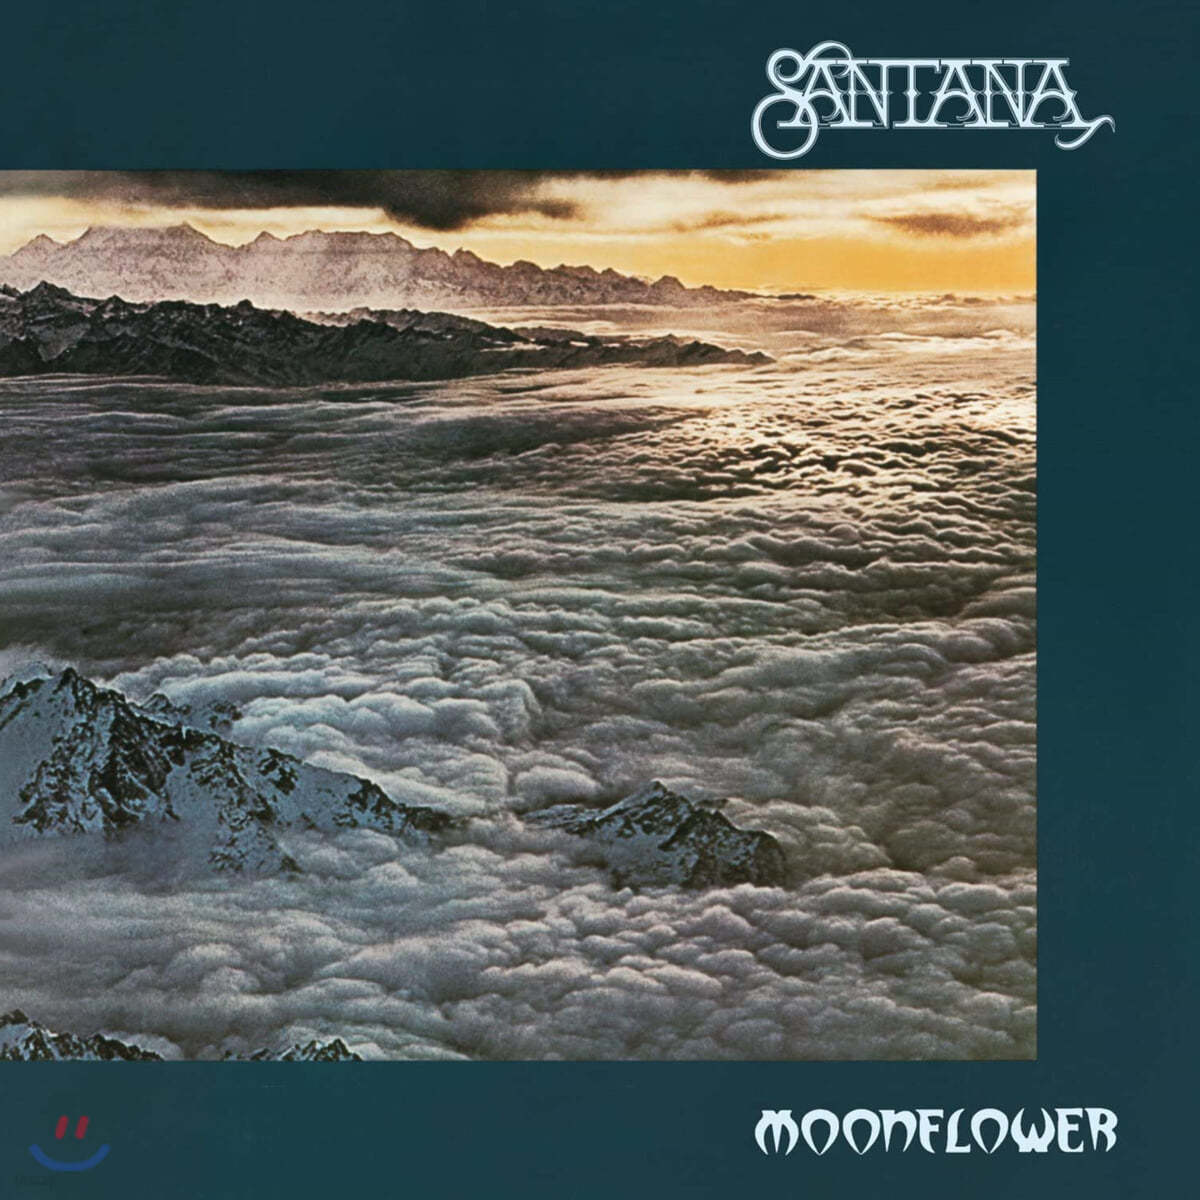 Carlos Santana (카를로스 산타나) - Moonflower [화이트 아이스크림 & 옐로우 컬러 2LP] 